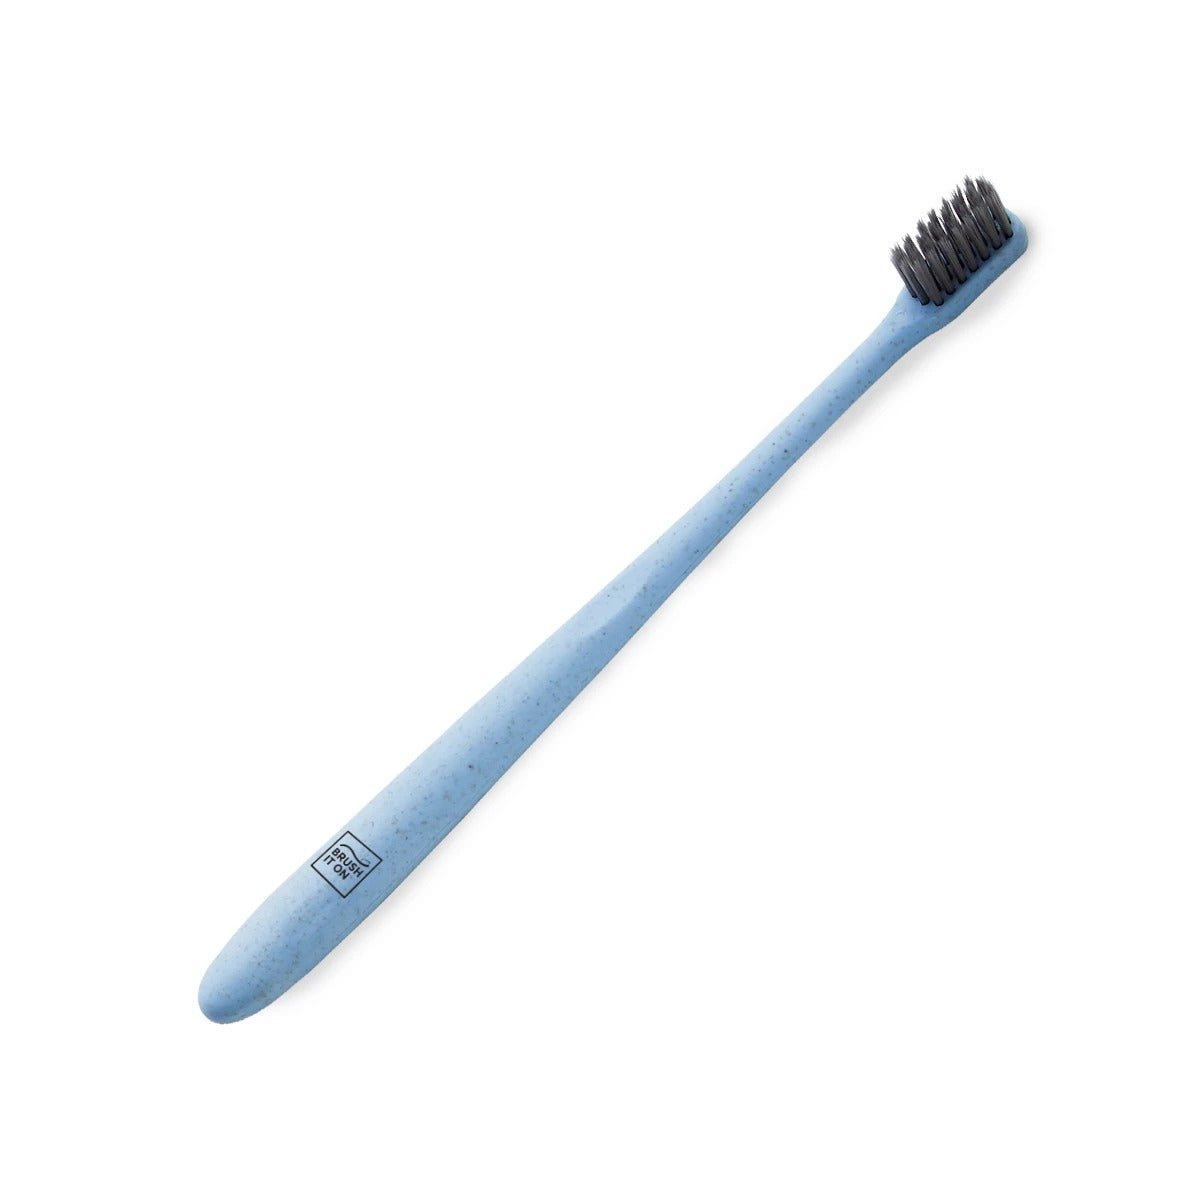 Brush It On Wheat Straw Toothbrush Toothbrush